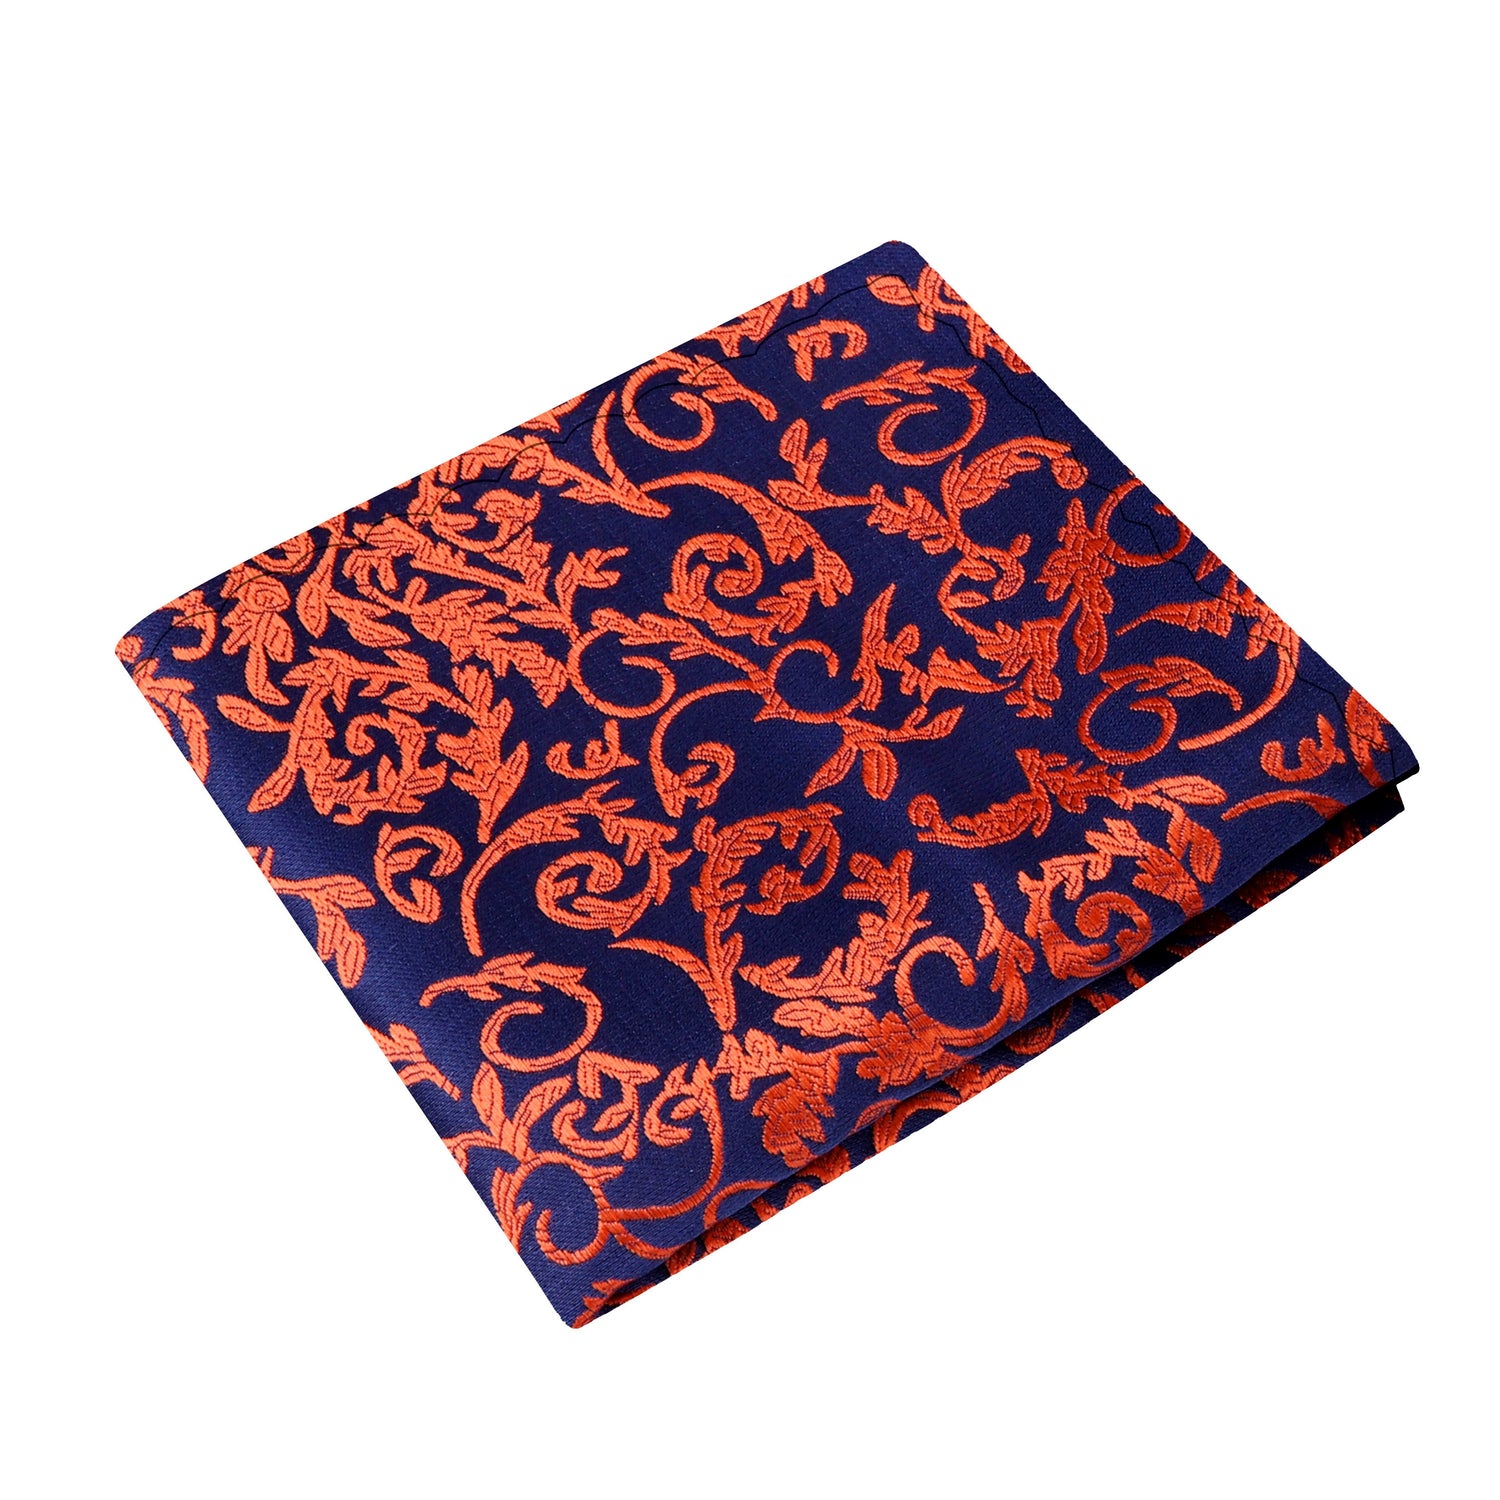 A Blue, Orange Intricate Floral Pattern Silk Pocket Square